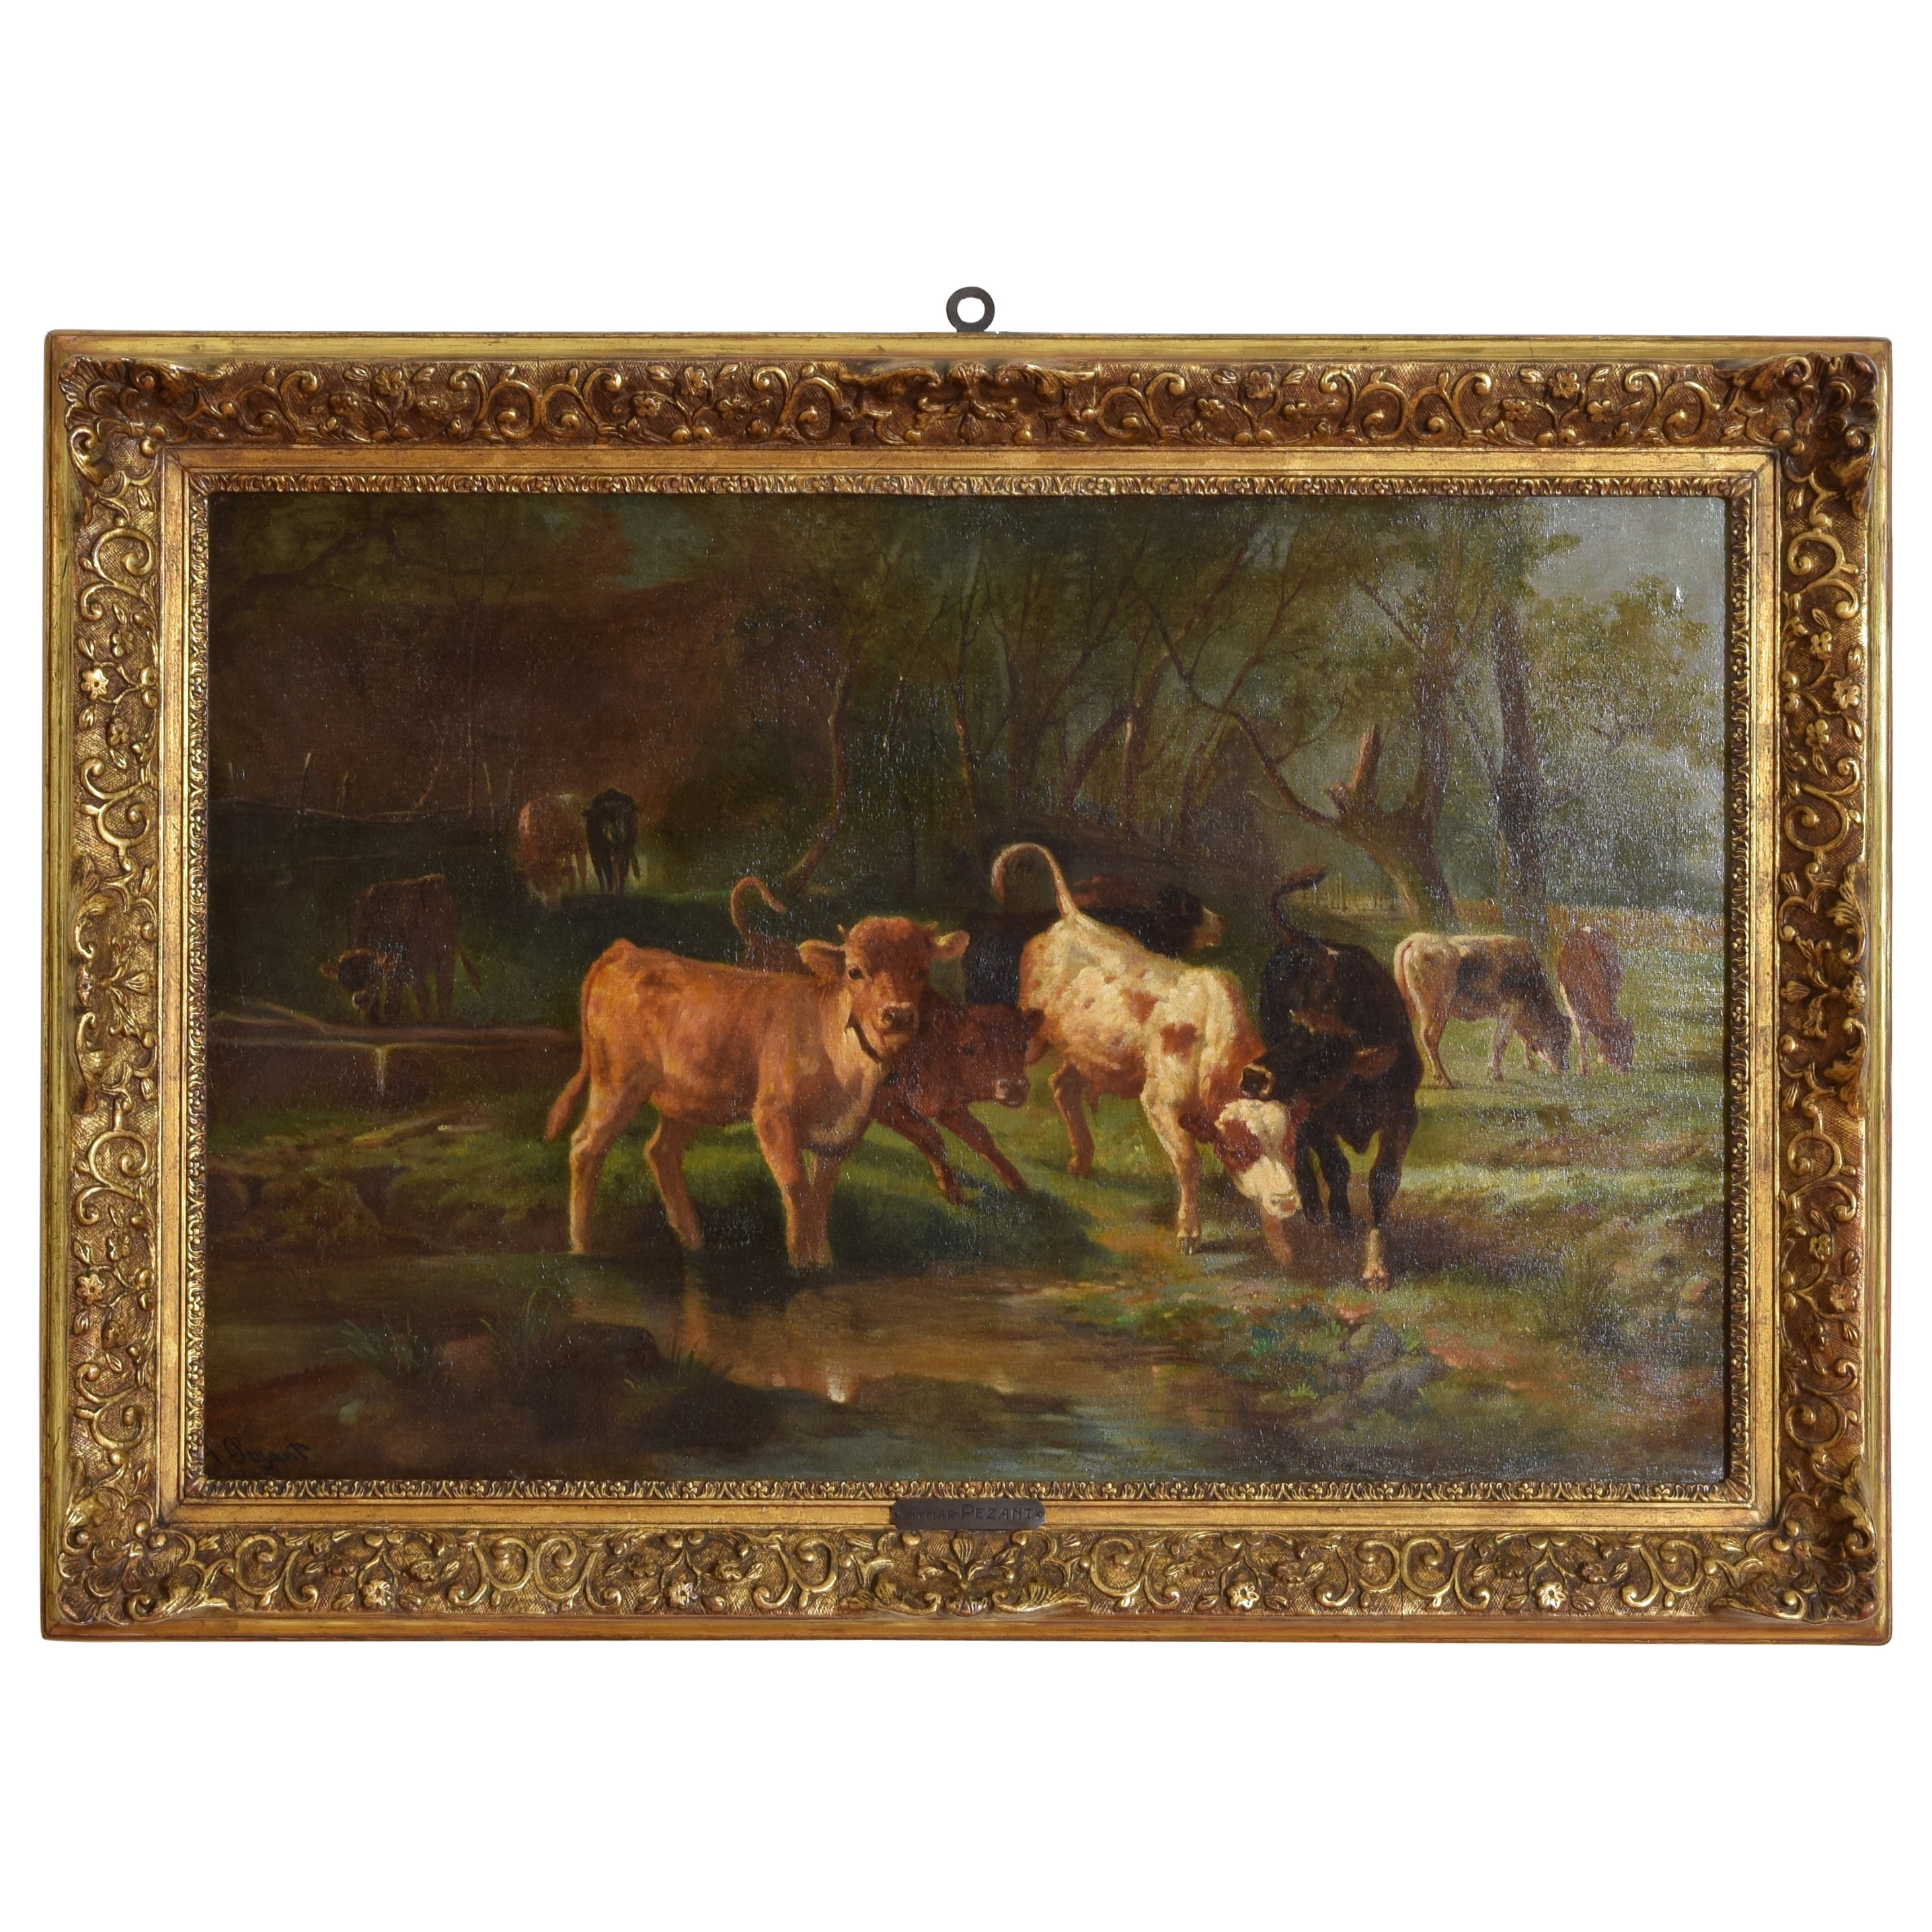 Ölgemälde auf Leinwand, Kühe im Stream, Aymar Pezant, 1846-1916